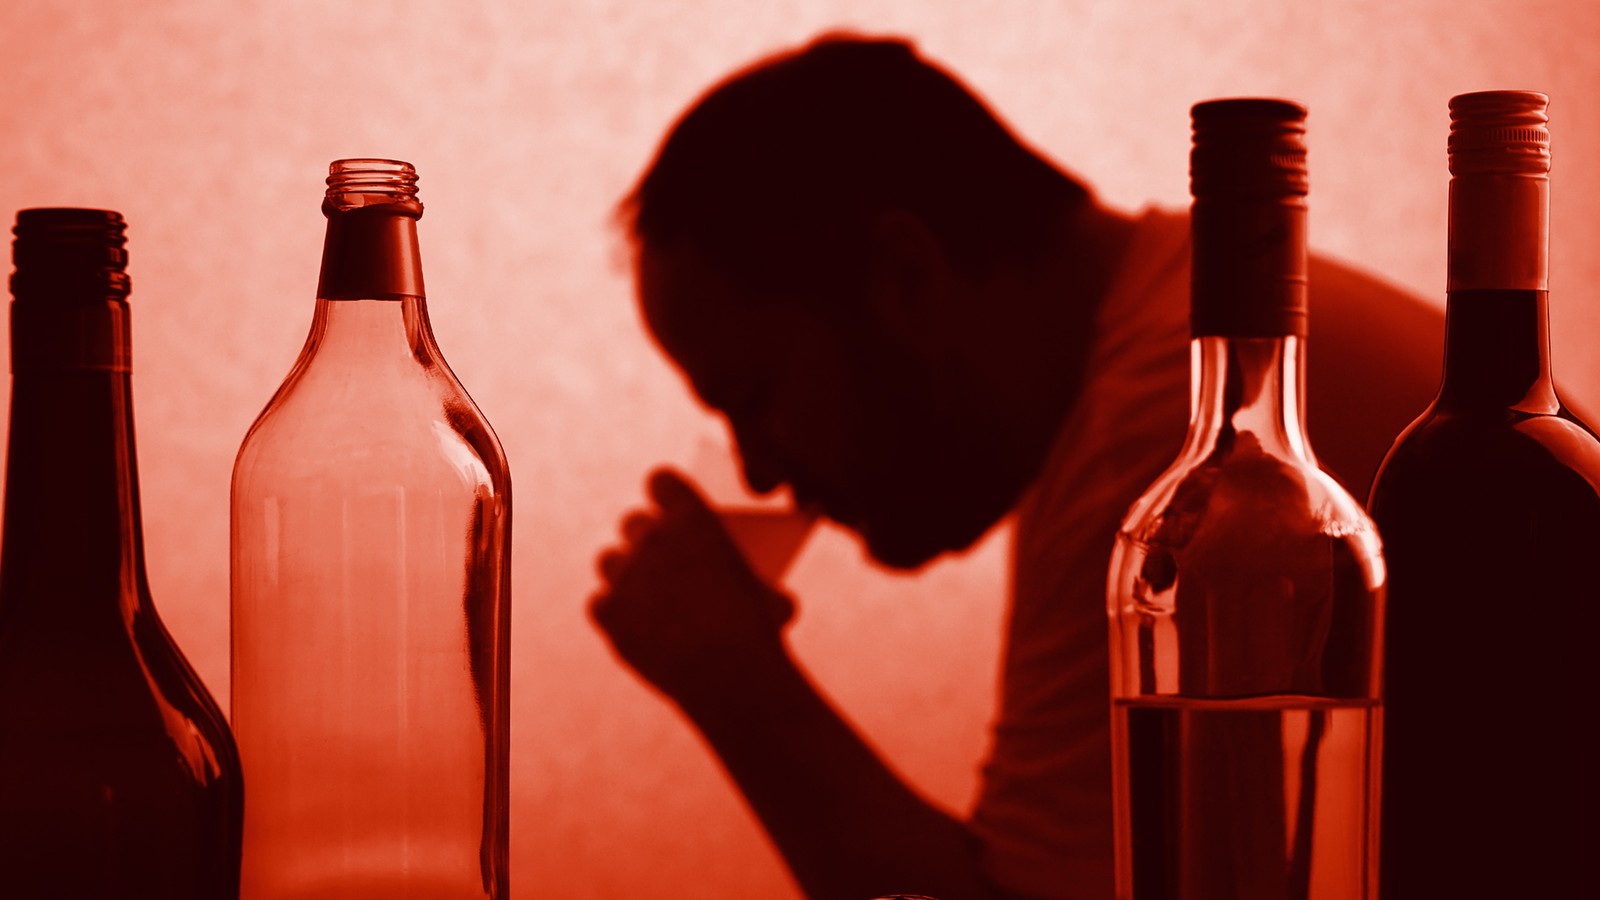 Alcoholism treatment